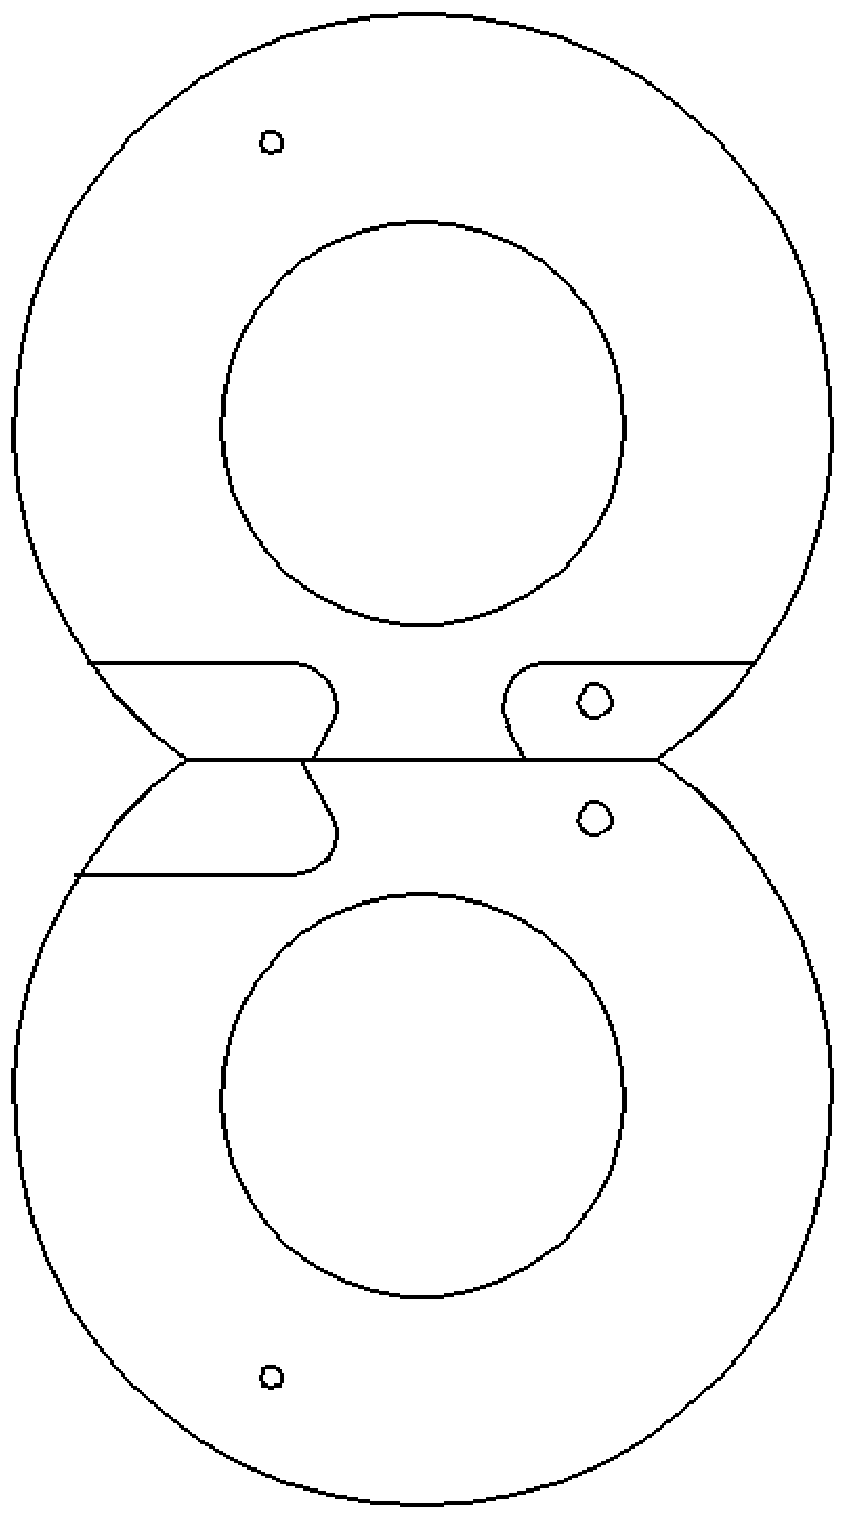 One-piece bearing